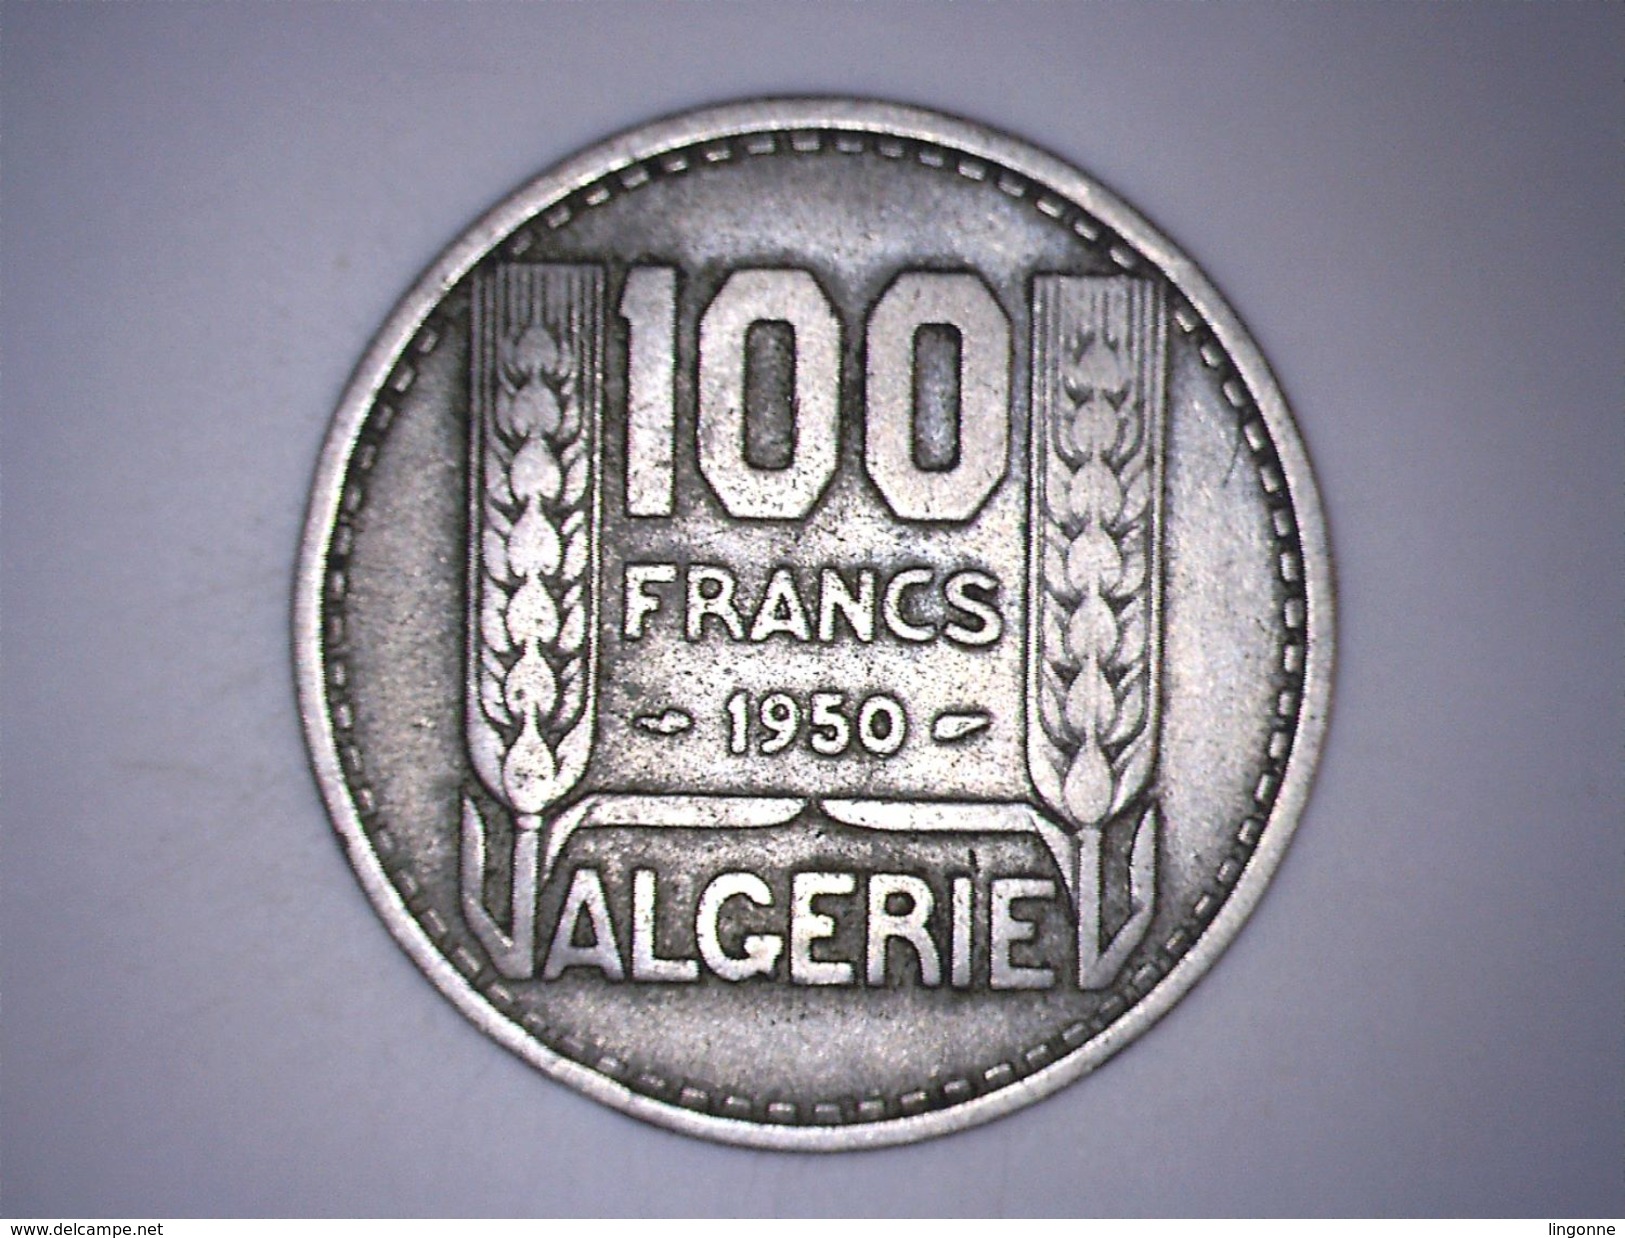 ALGERIE / ALGERIA 100 FRANCS 1950 - Argelia